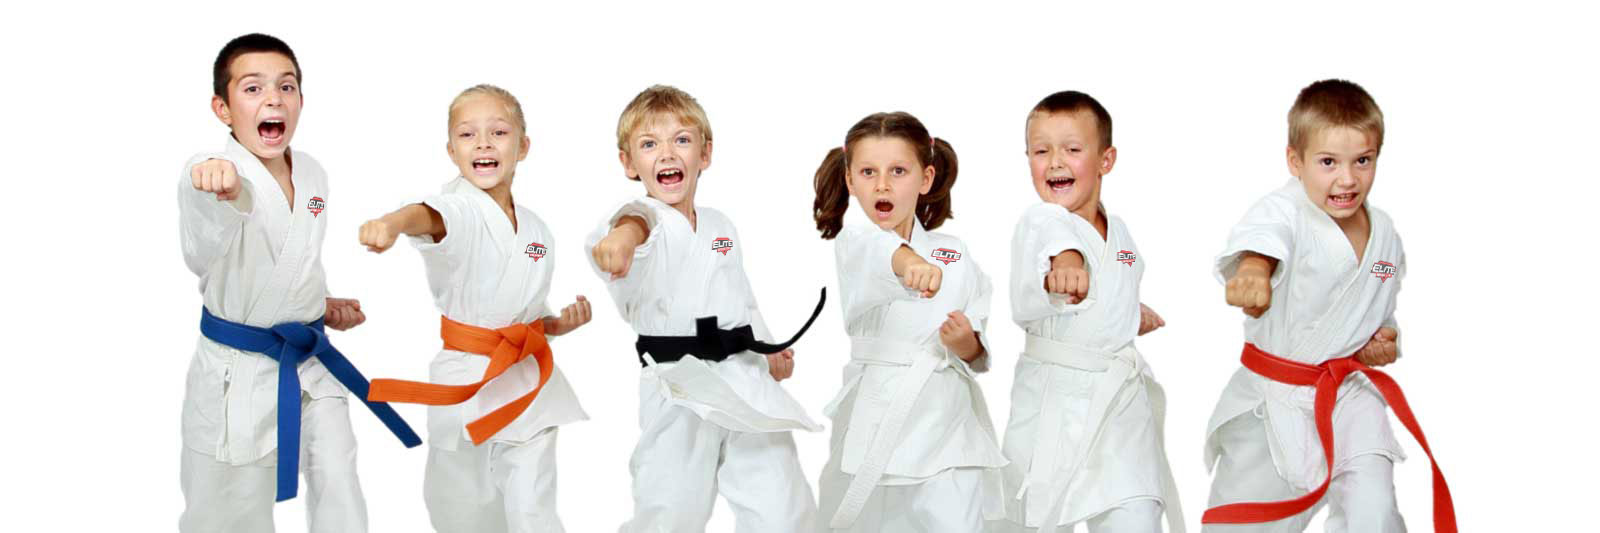 Sejarah Taekwondo di Indonesia - NamaBlog